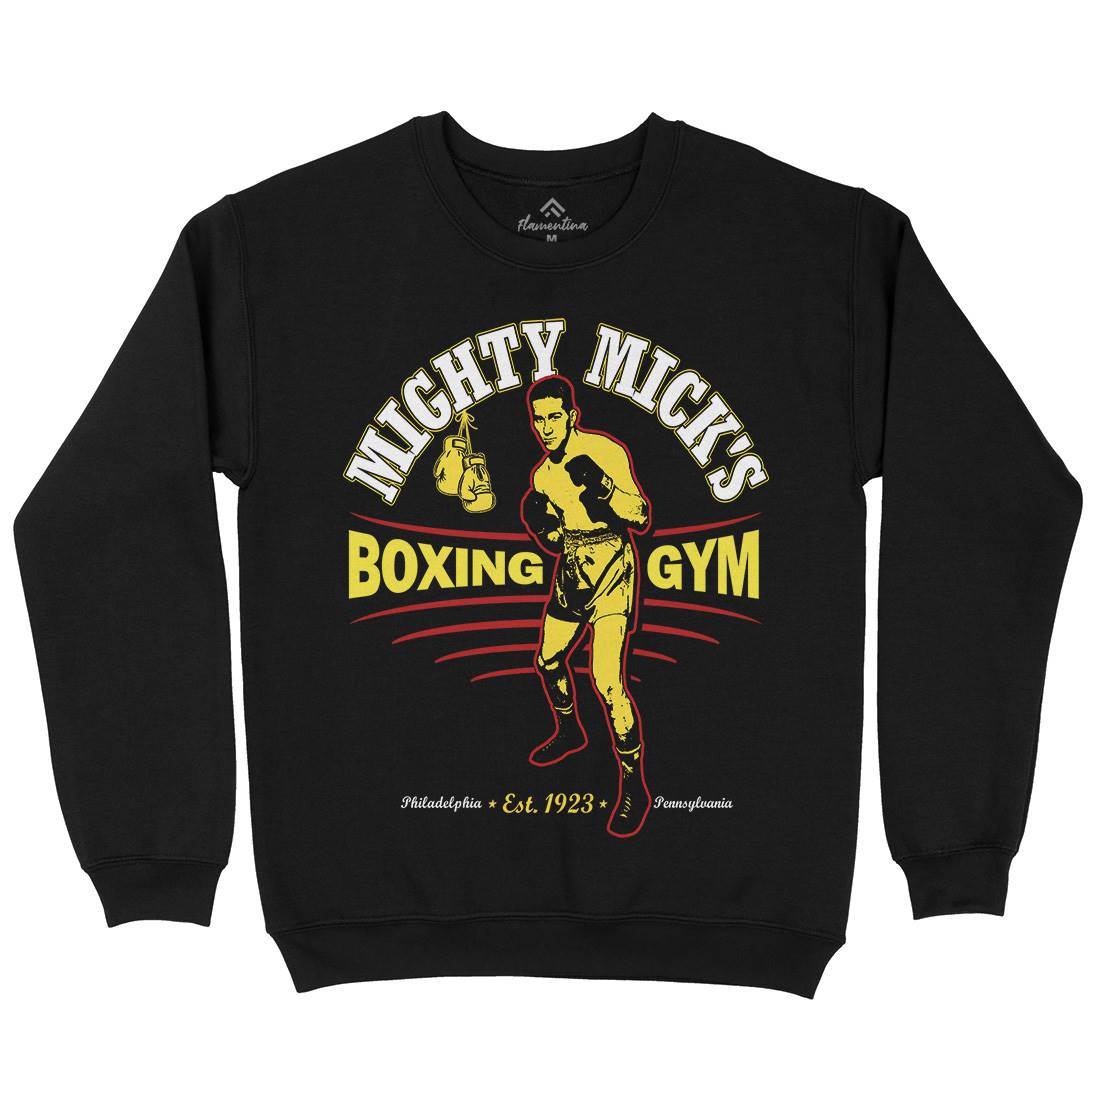 Mighty Micks Gym Kids Crew Neck Sweatshirt Sport D276